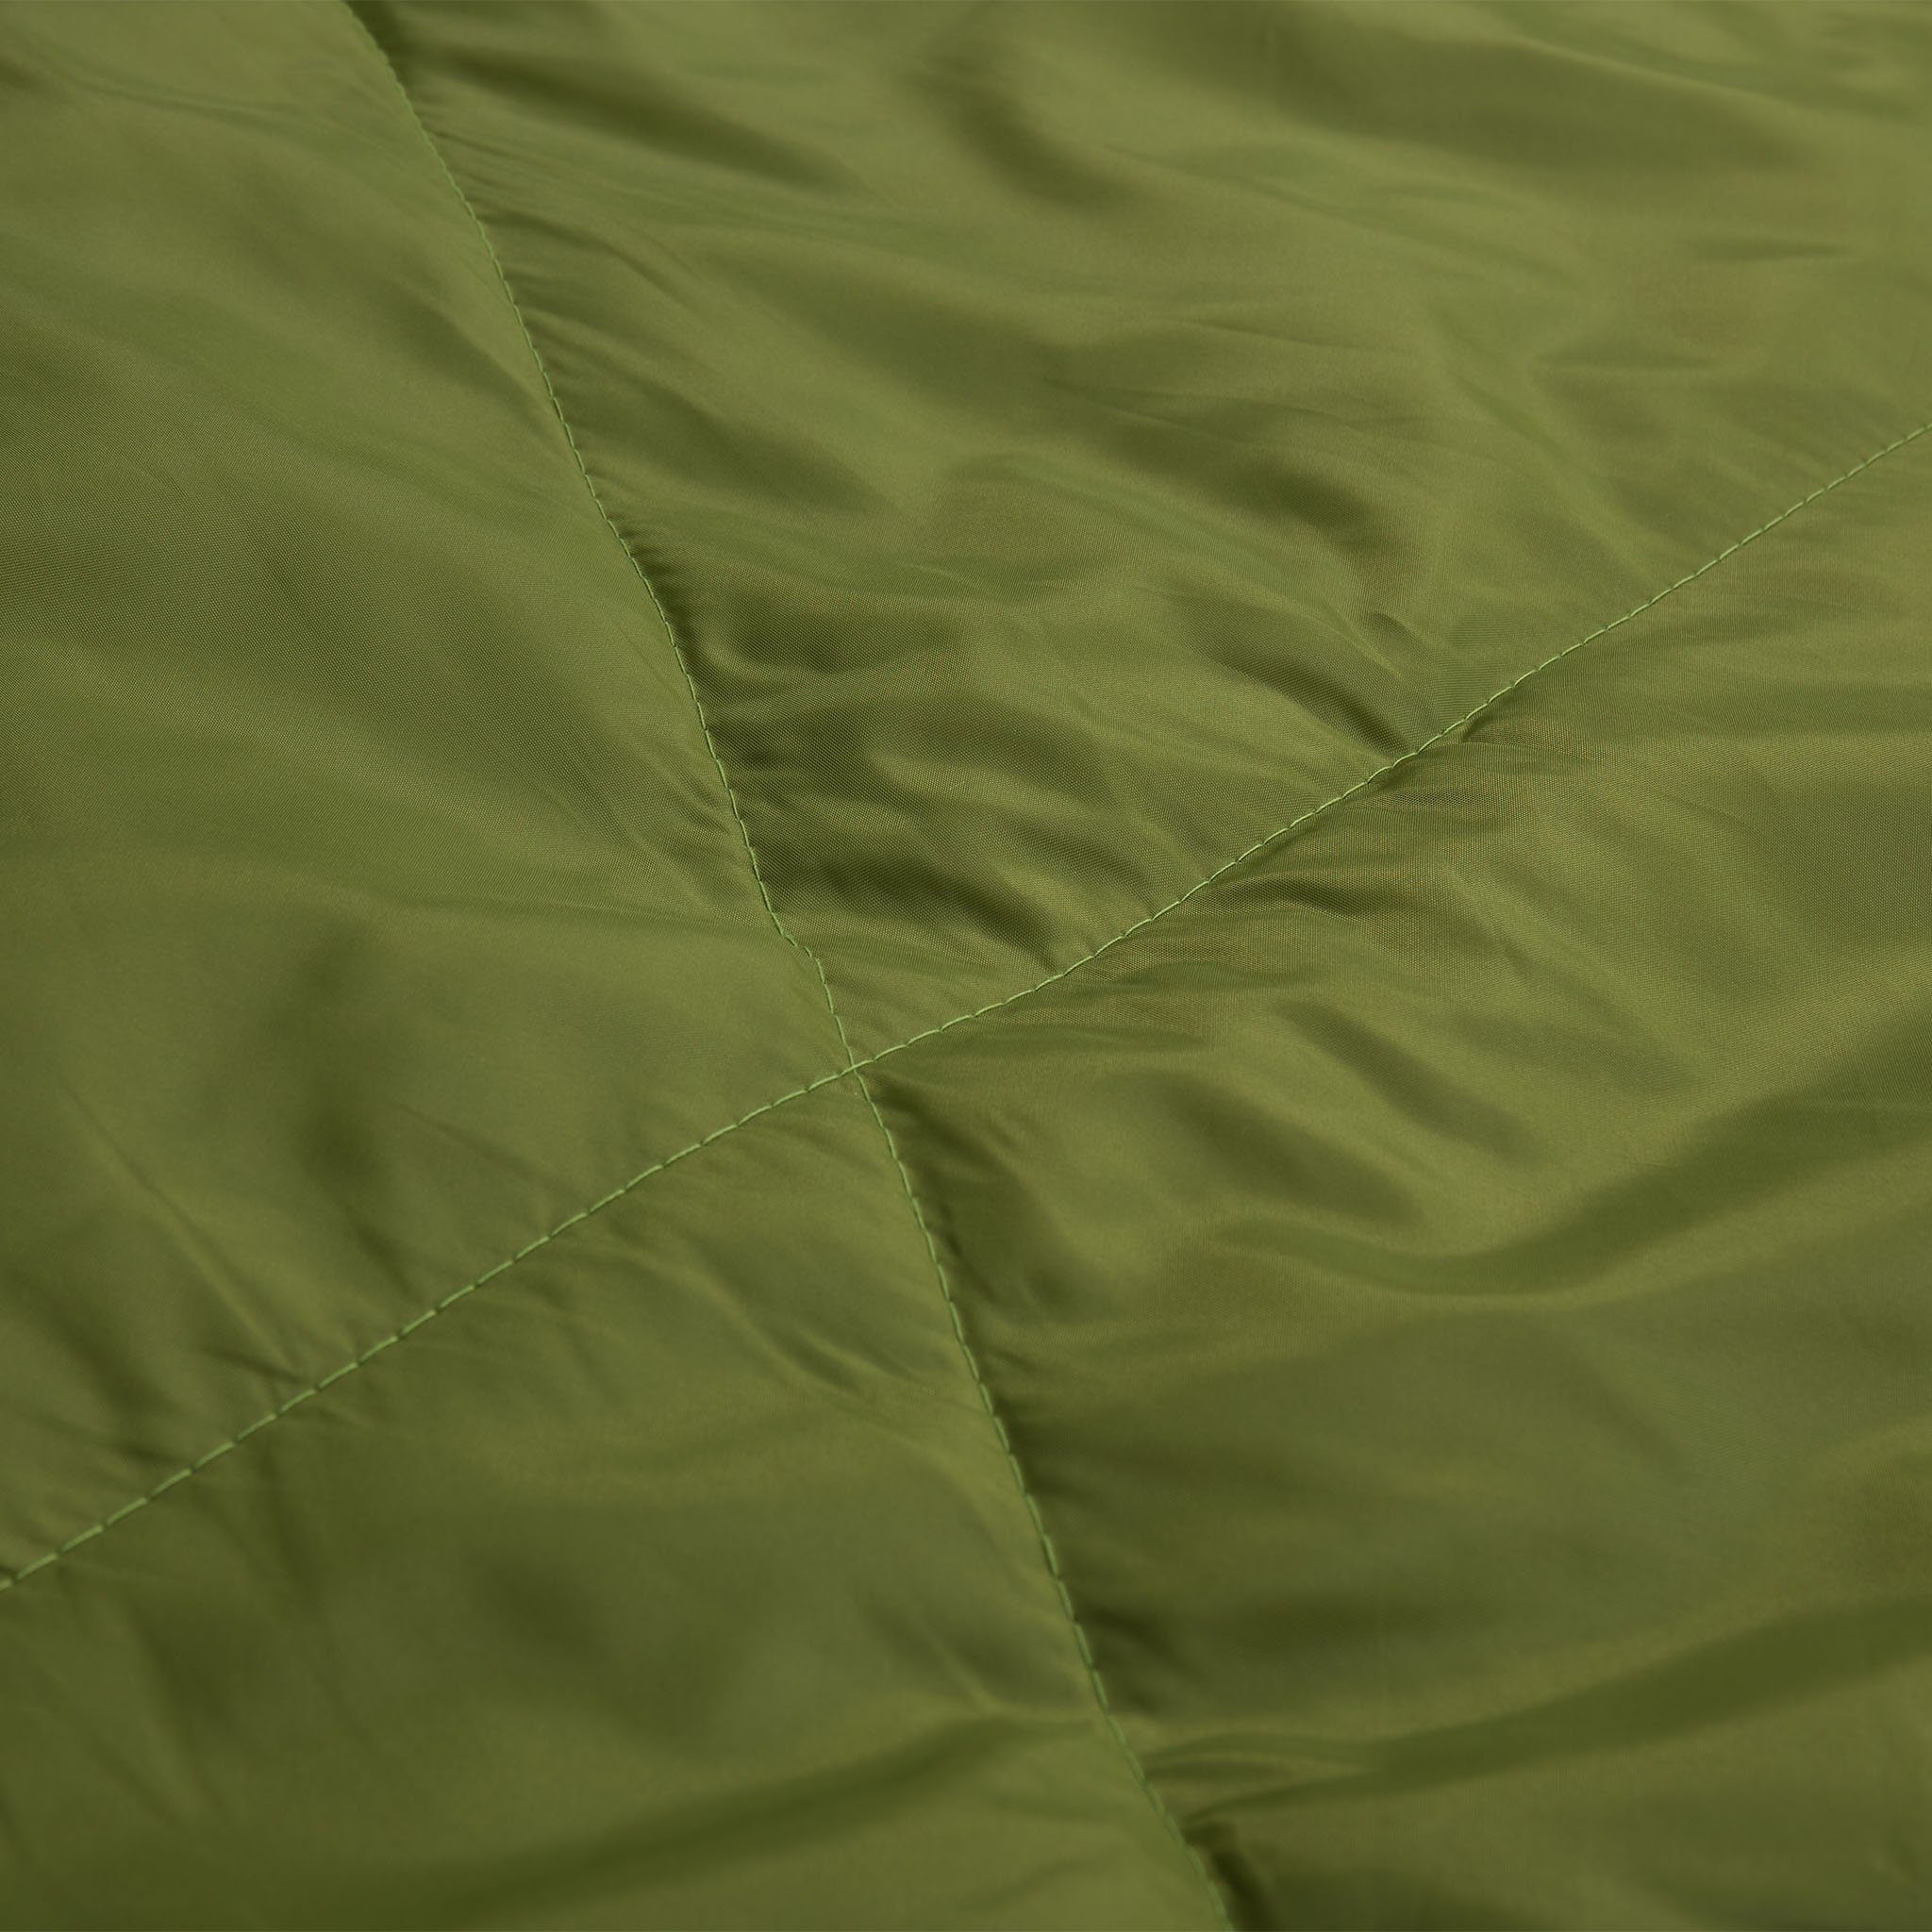 Hüttenschlafsack - atmungsaktiv Kopfkissen, Schlafsack groß Dunkelgrün 190x30x150cm Lumaland Doppelschlafsack wasserabweisend, 2-Personen